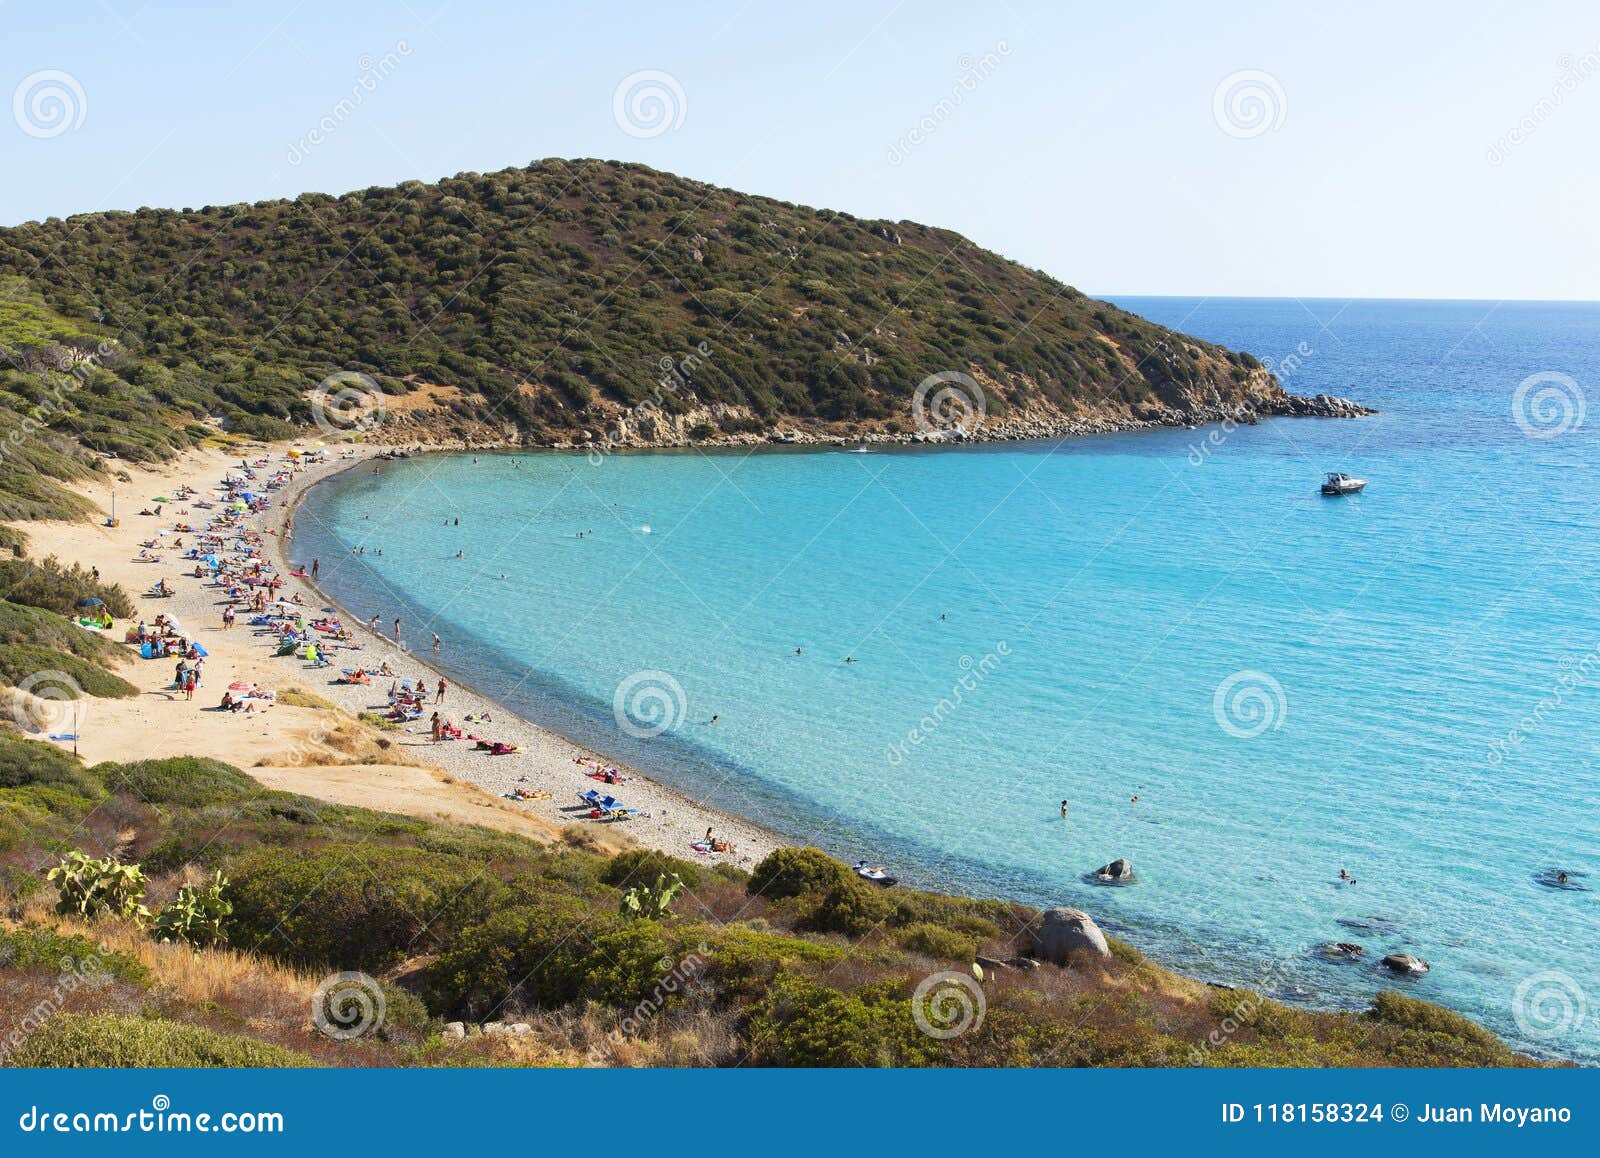 Spiaggia Di Mari Pintau Beach In Sardinia Italy Editorial Stock Image Image Of People Ocean 118158324